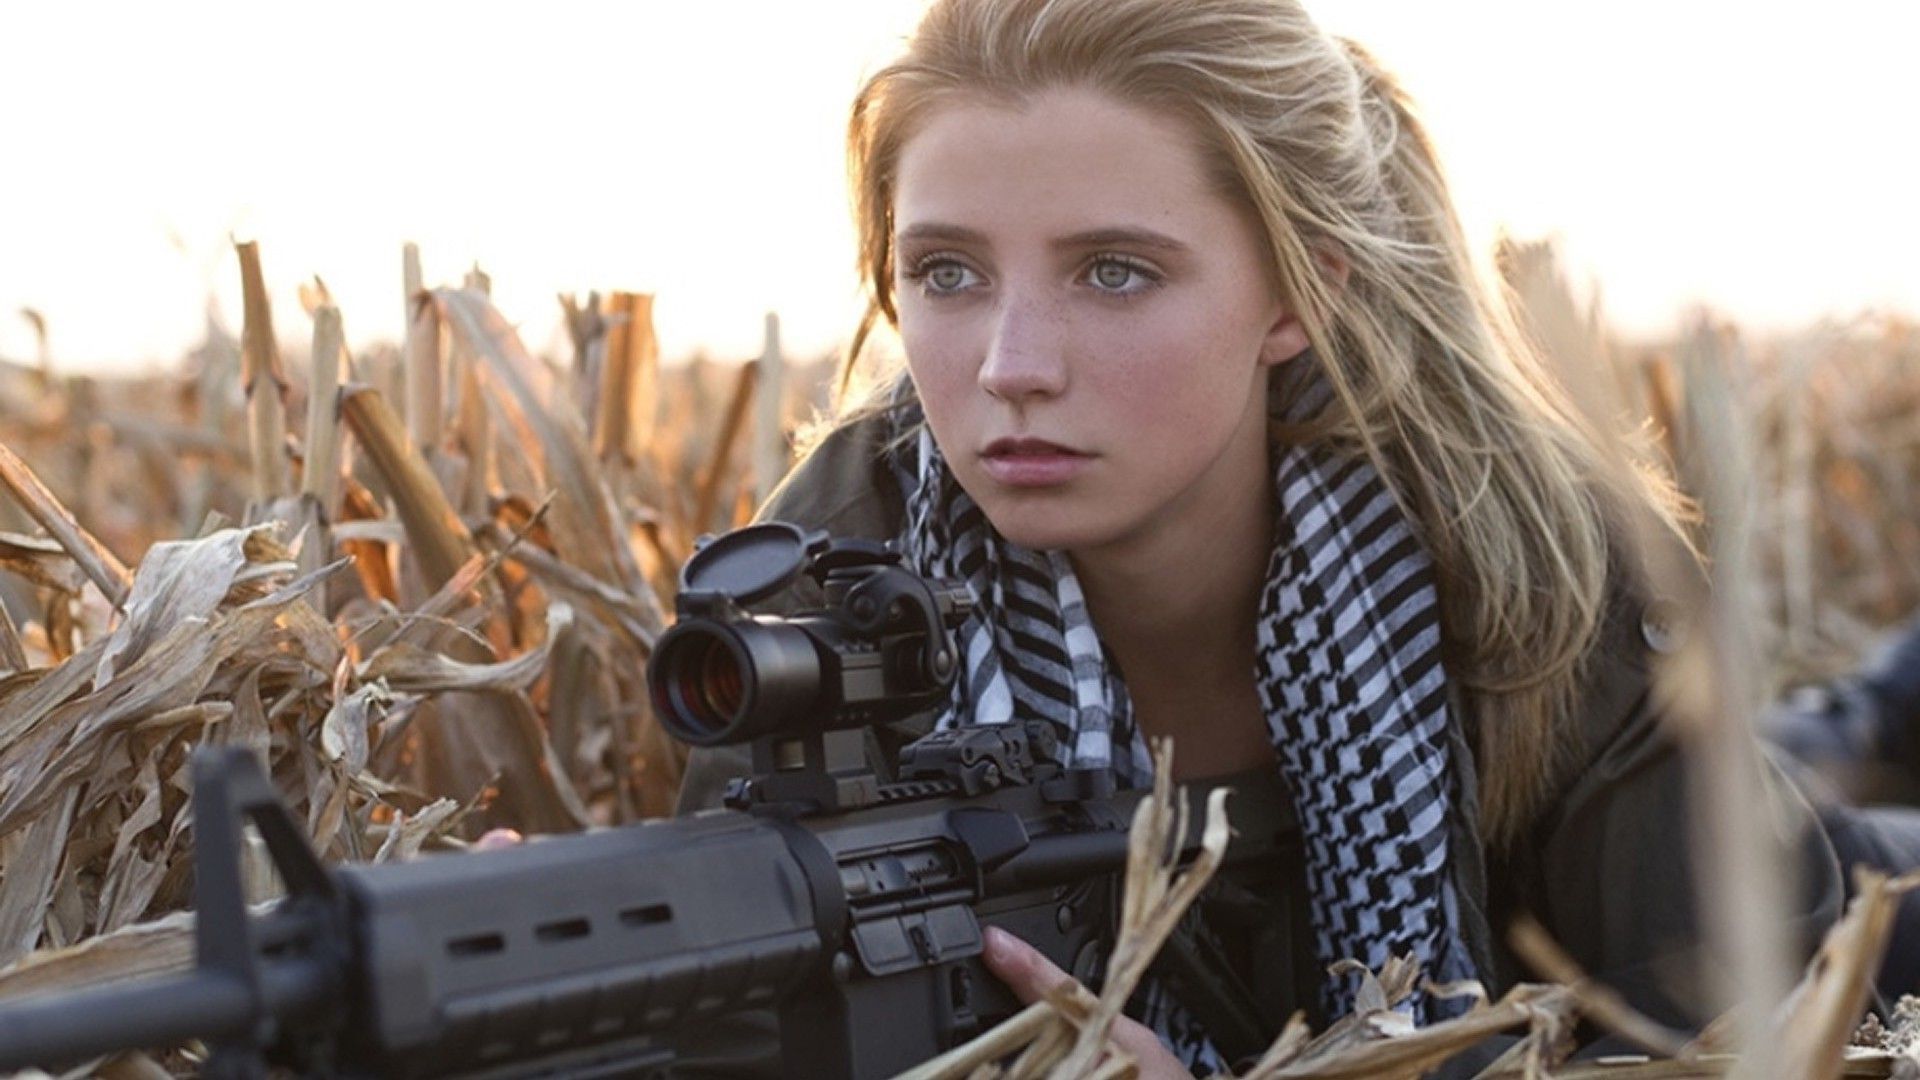 awesome Cute Sniper Girl Wallpaper HD. Sniper girl, Military girl, Army girl